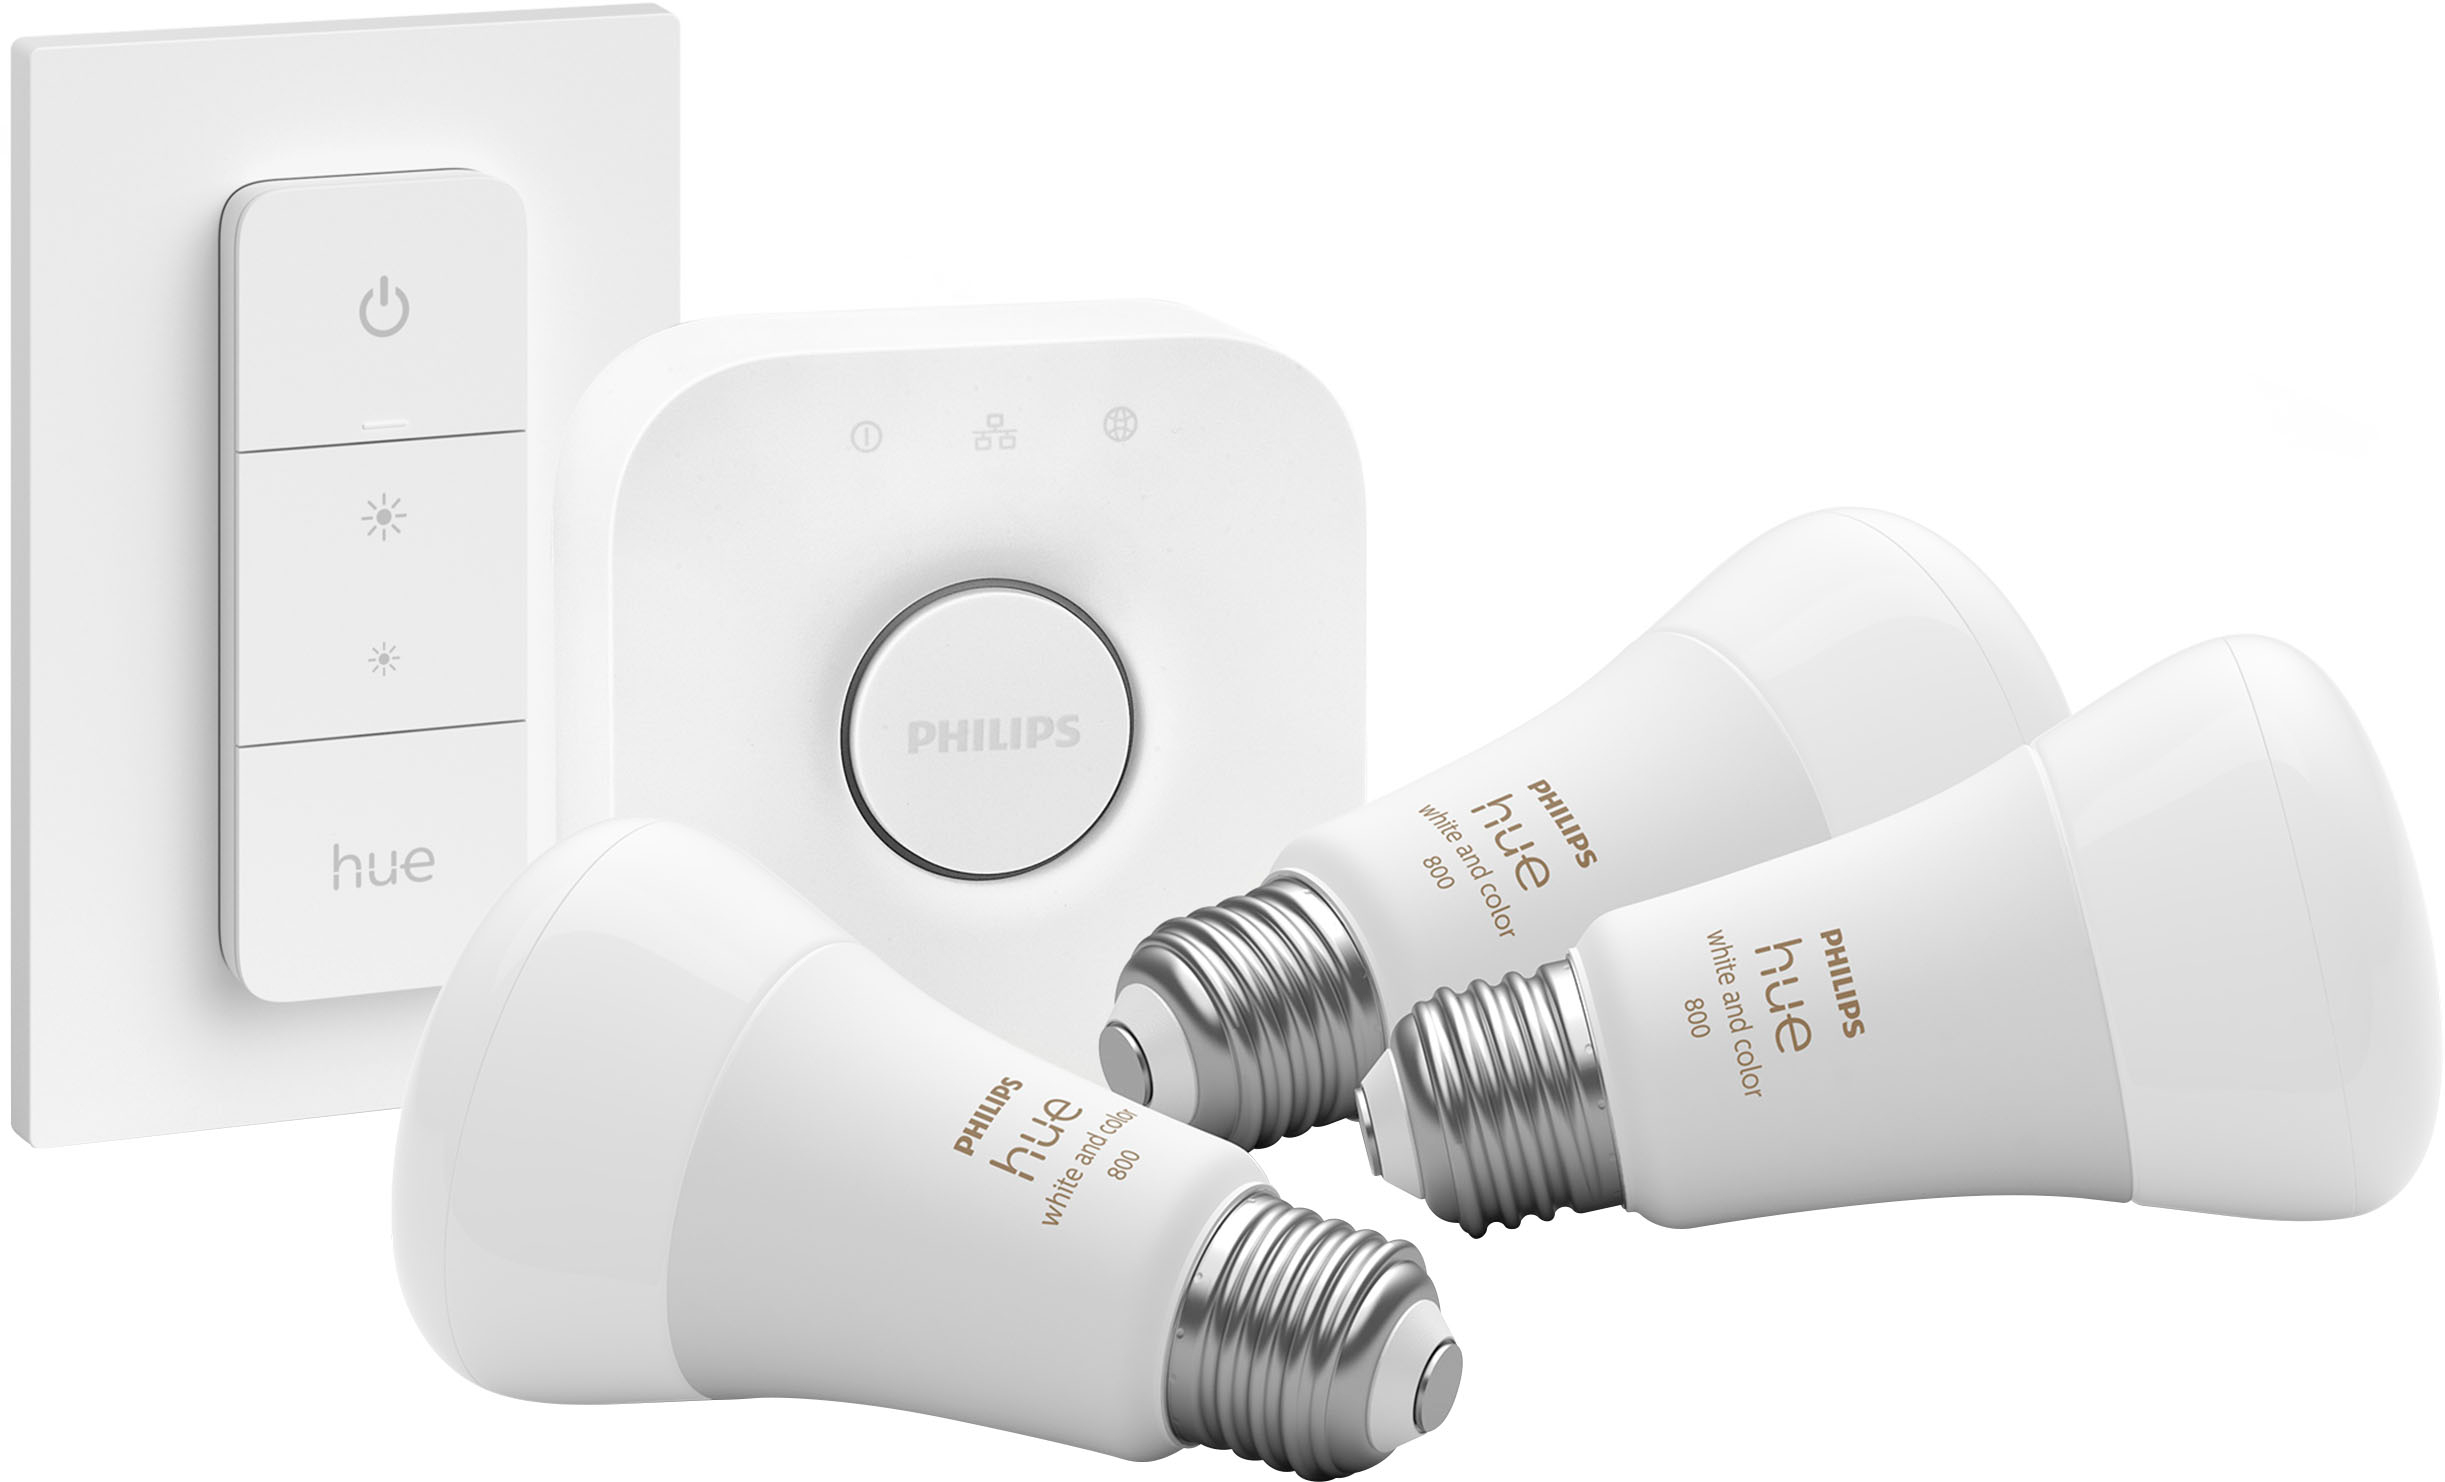 Philips Hue A19 60W LED Smart Light Bulb in White (3-Pack)